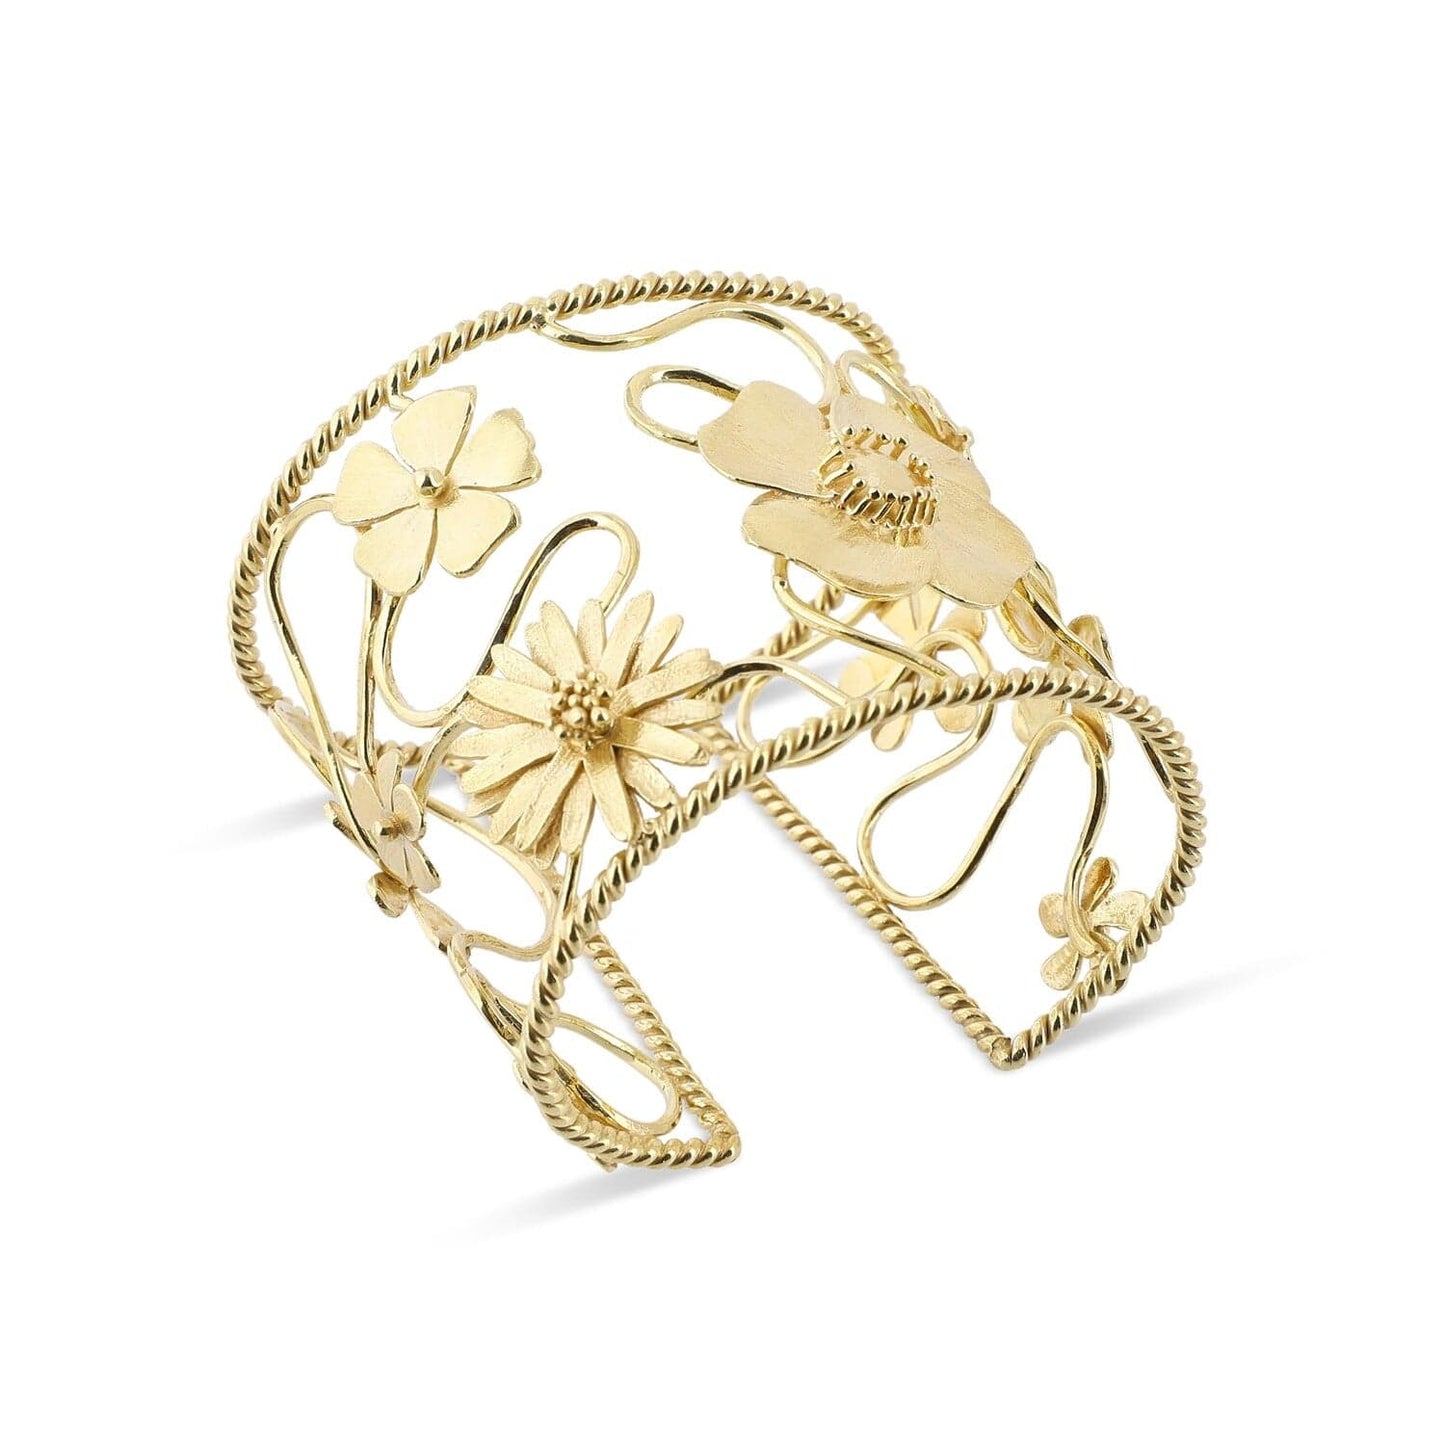 Christine Bekaert Jewelry Bracelets Bouquet Cuff